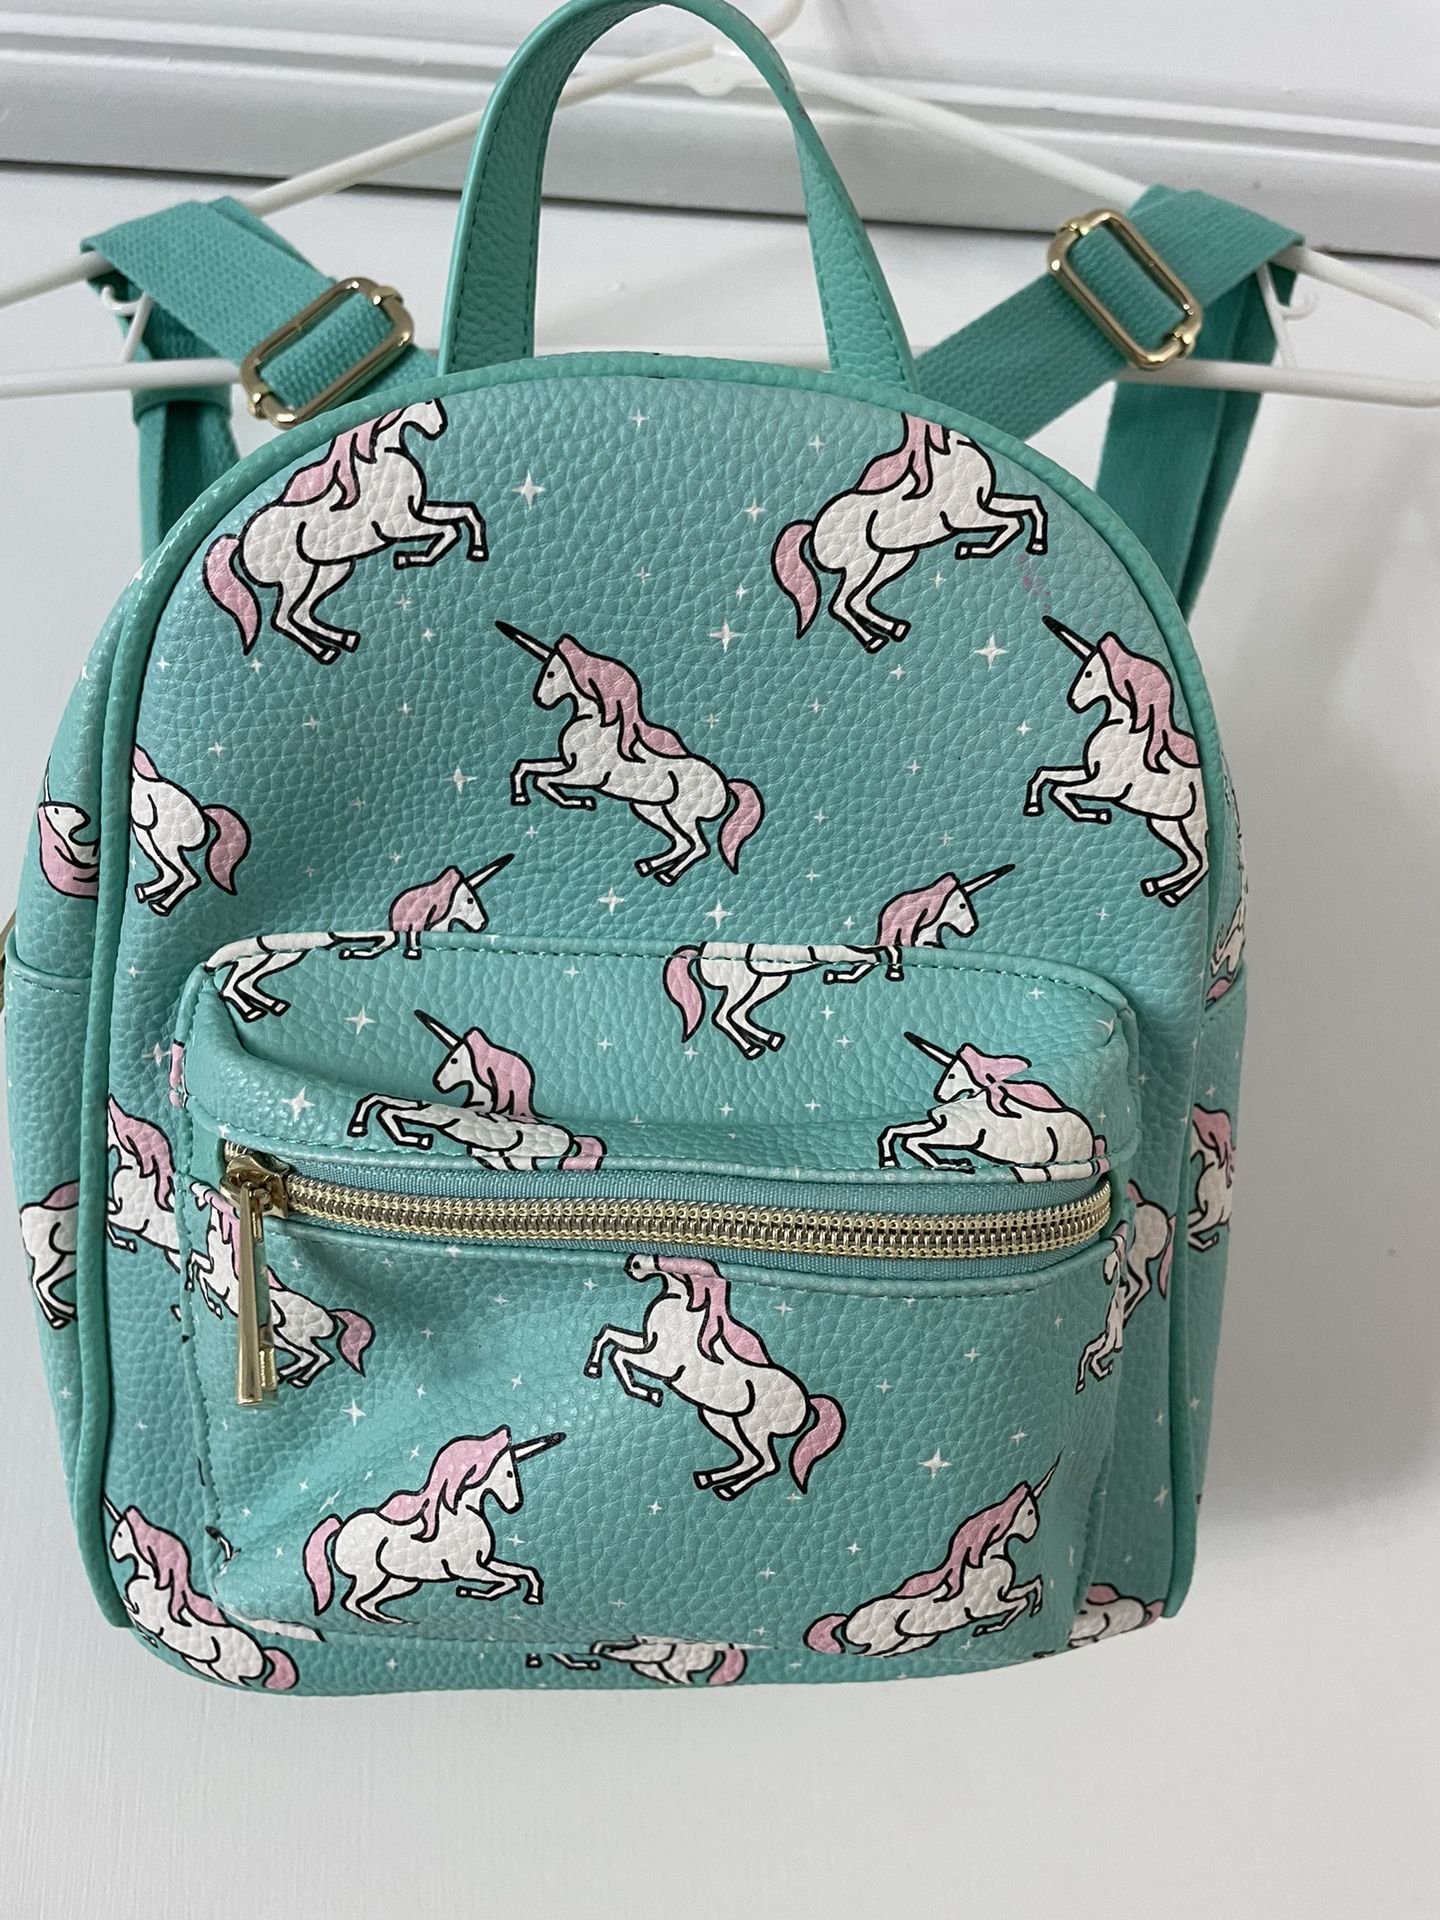 Unicorn Backpack 